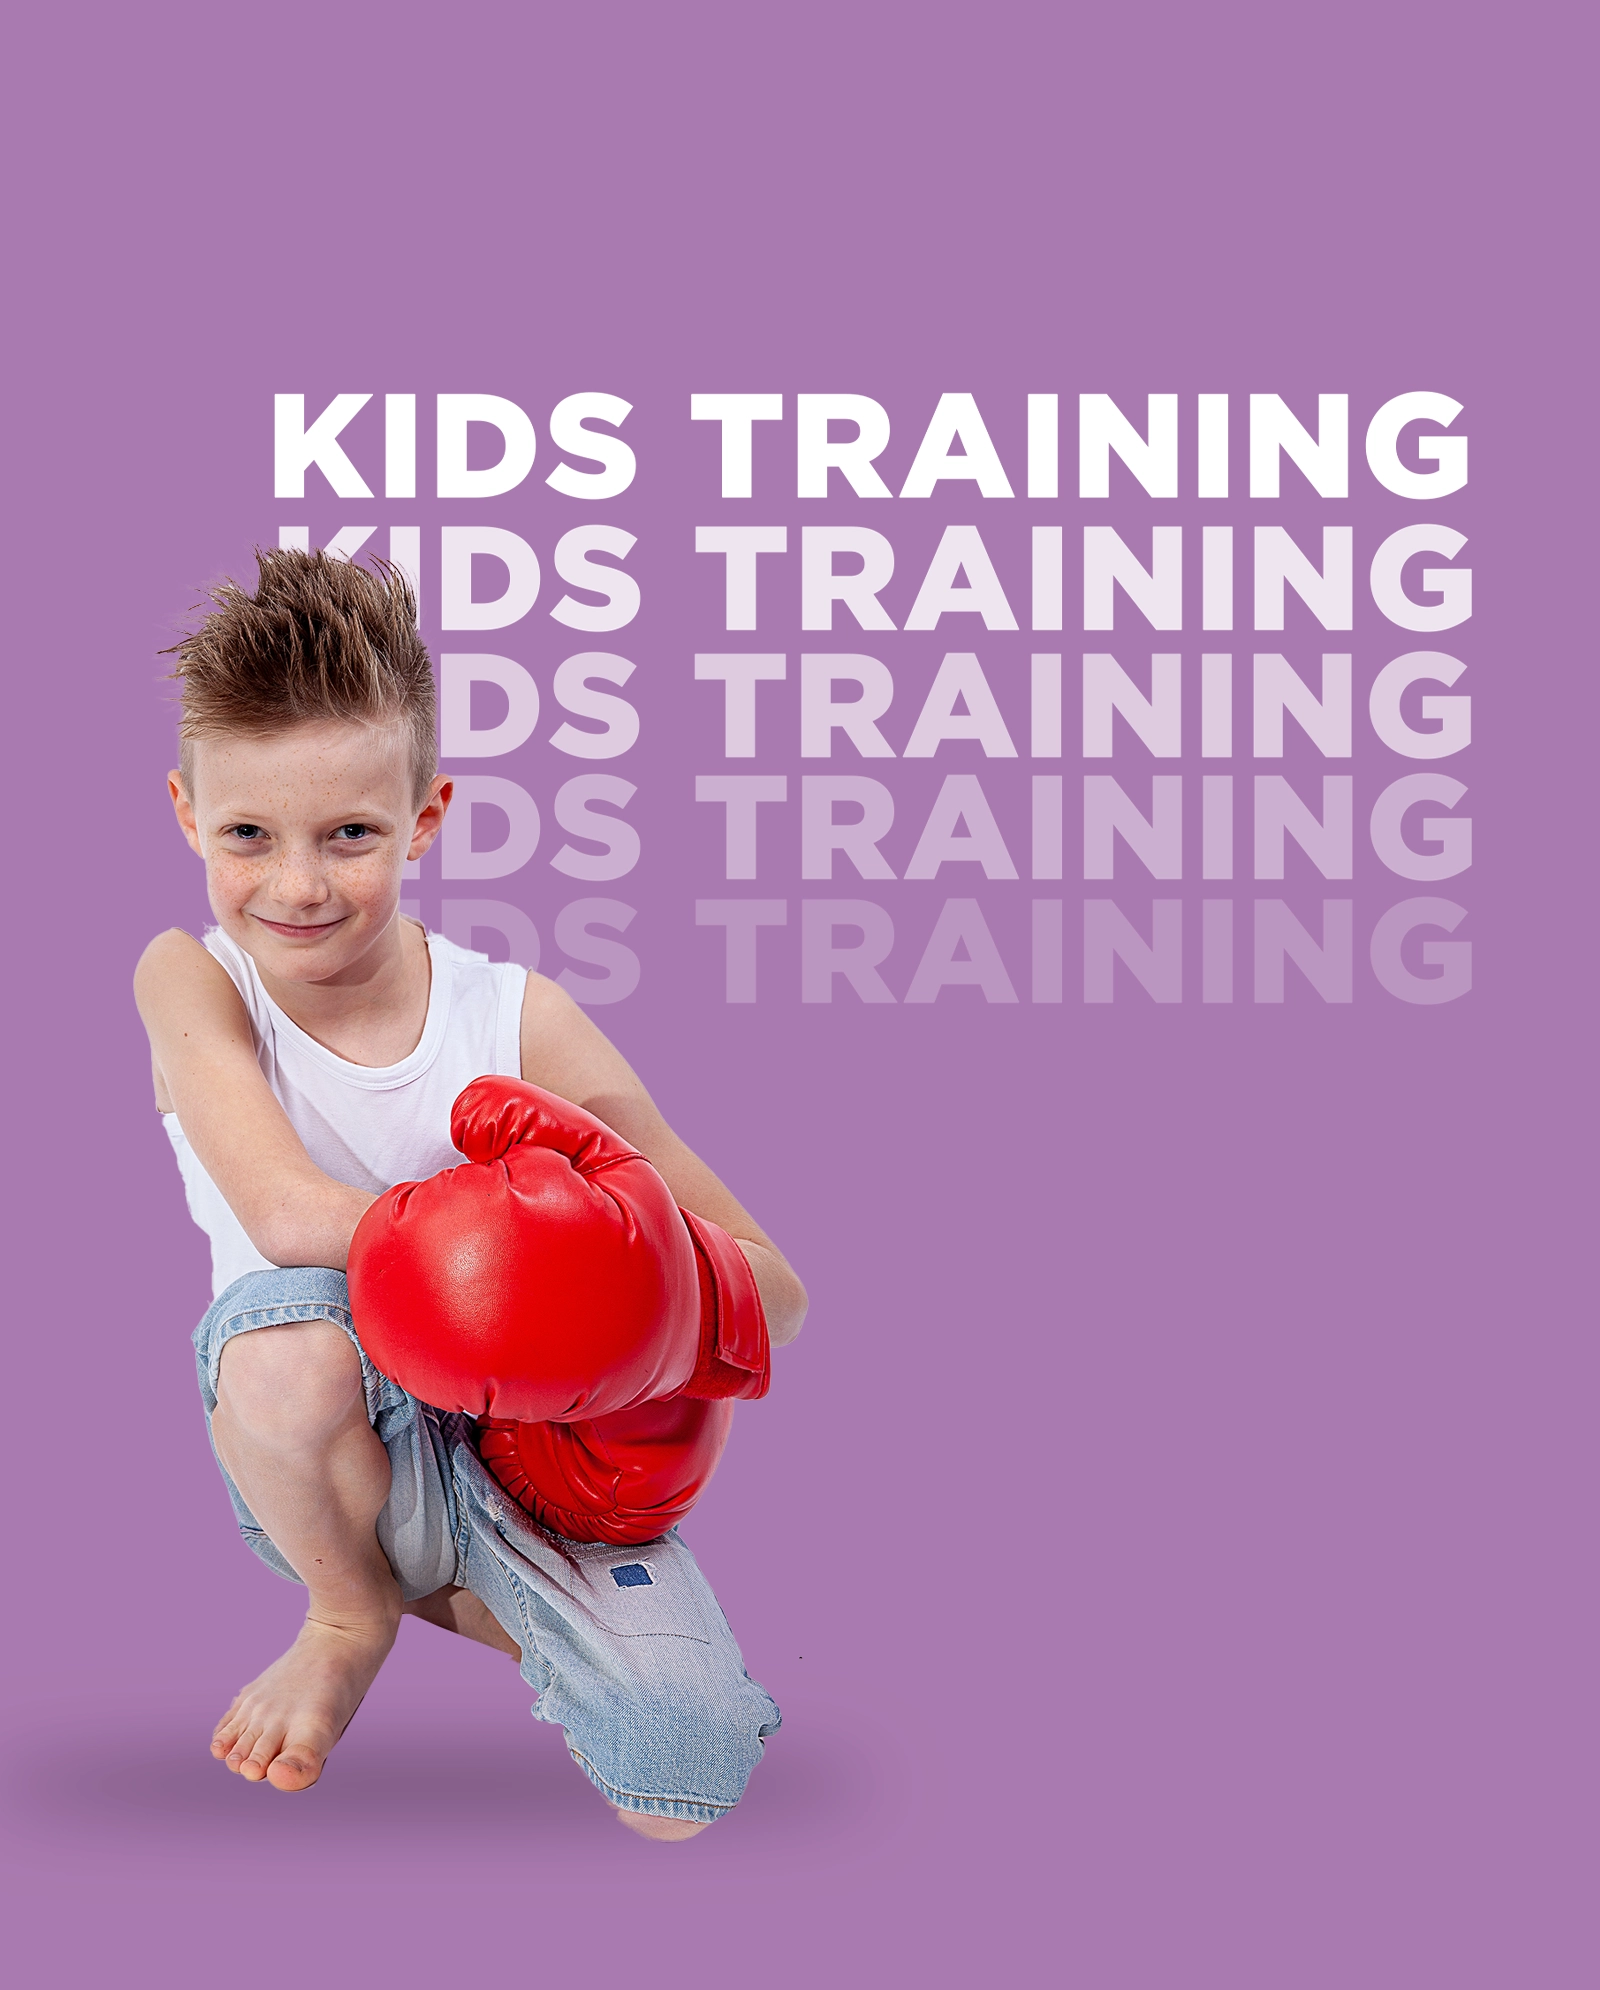 Kids training